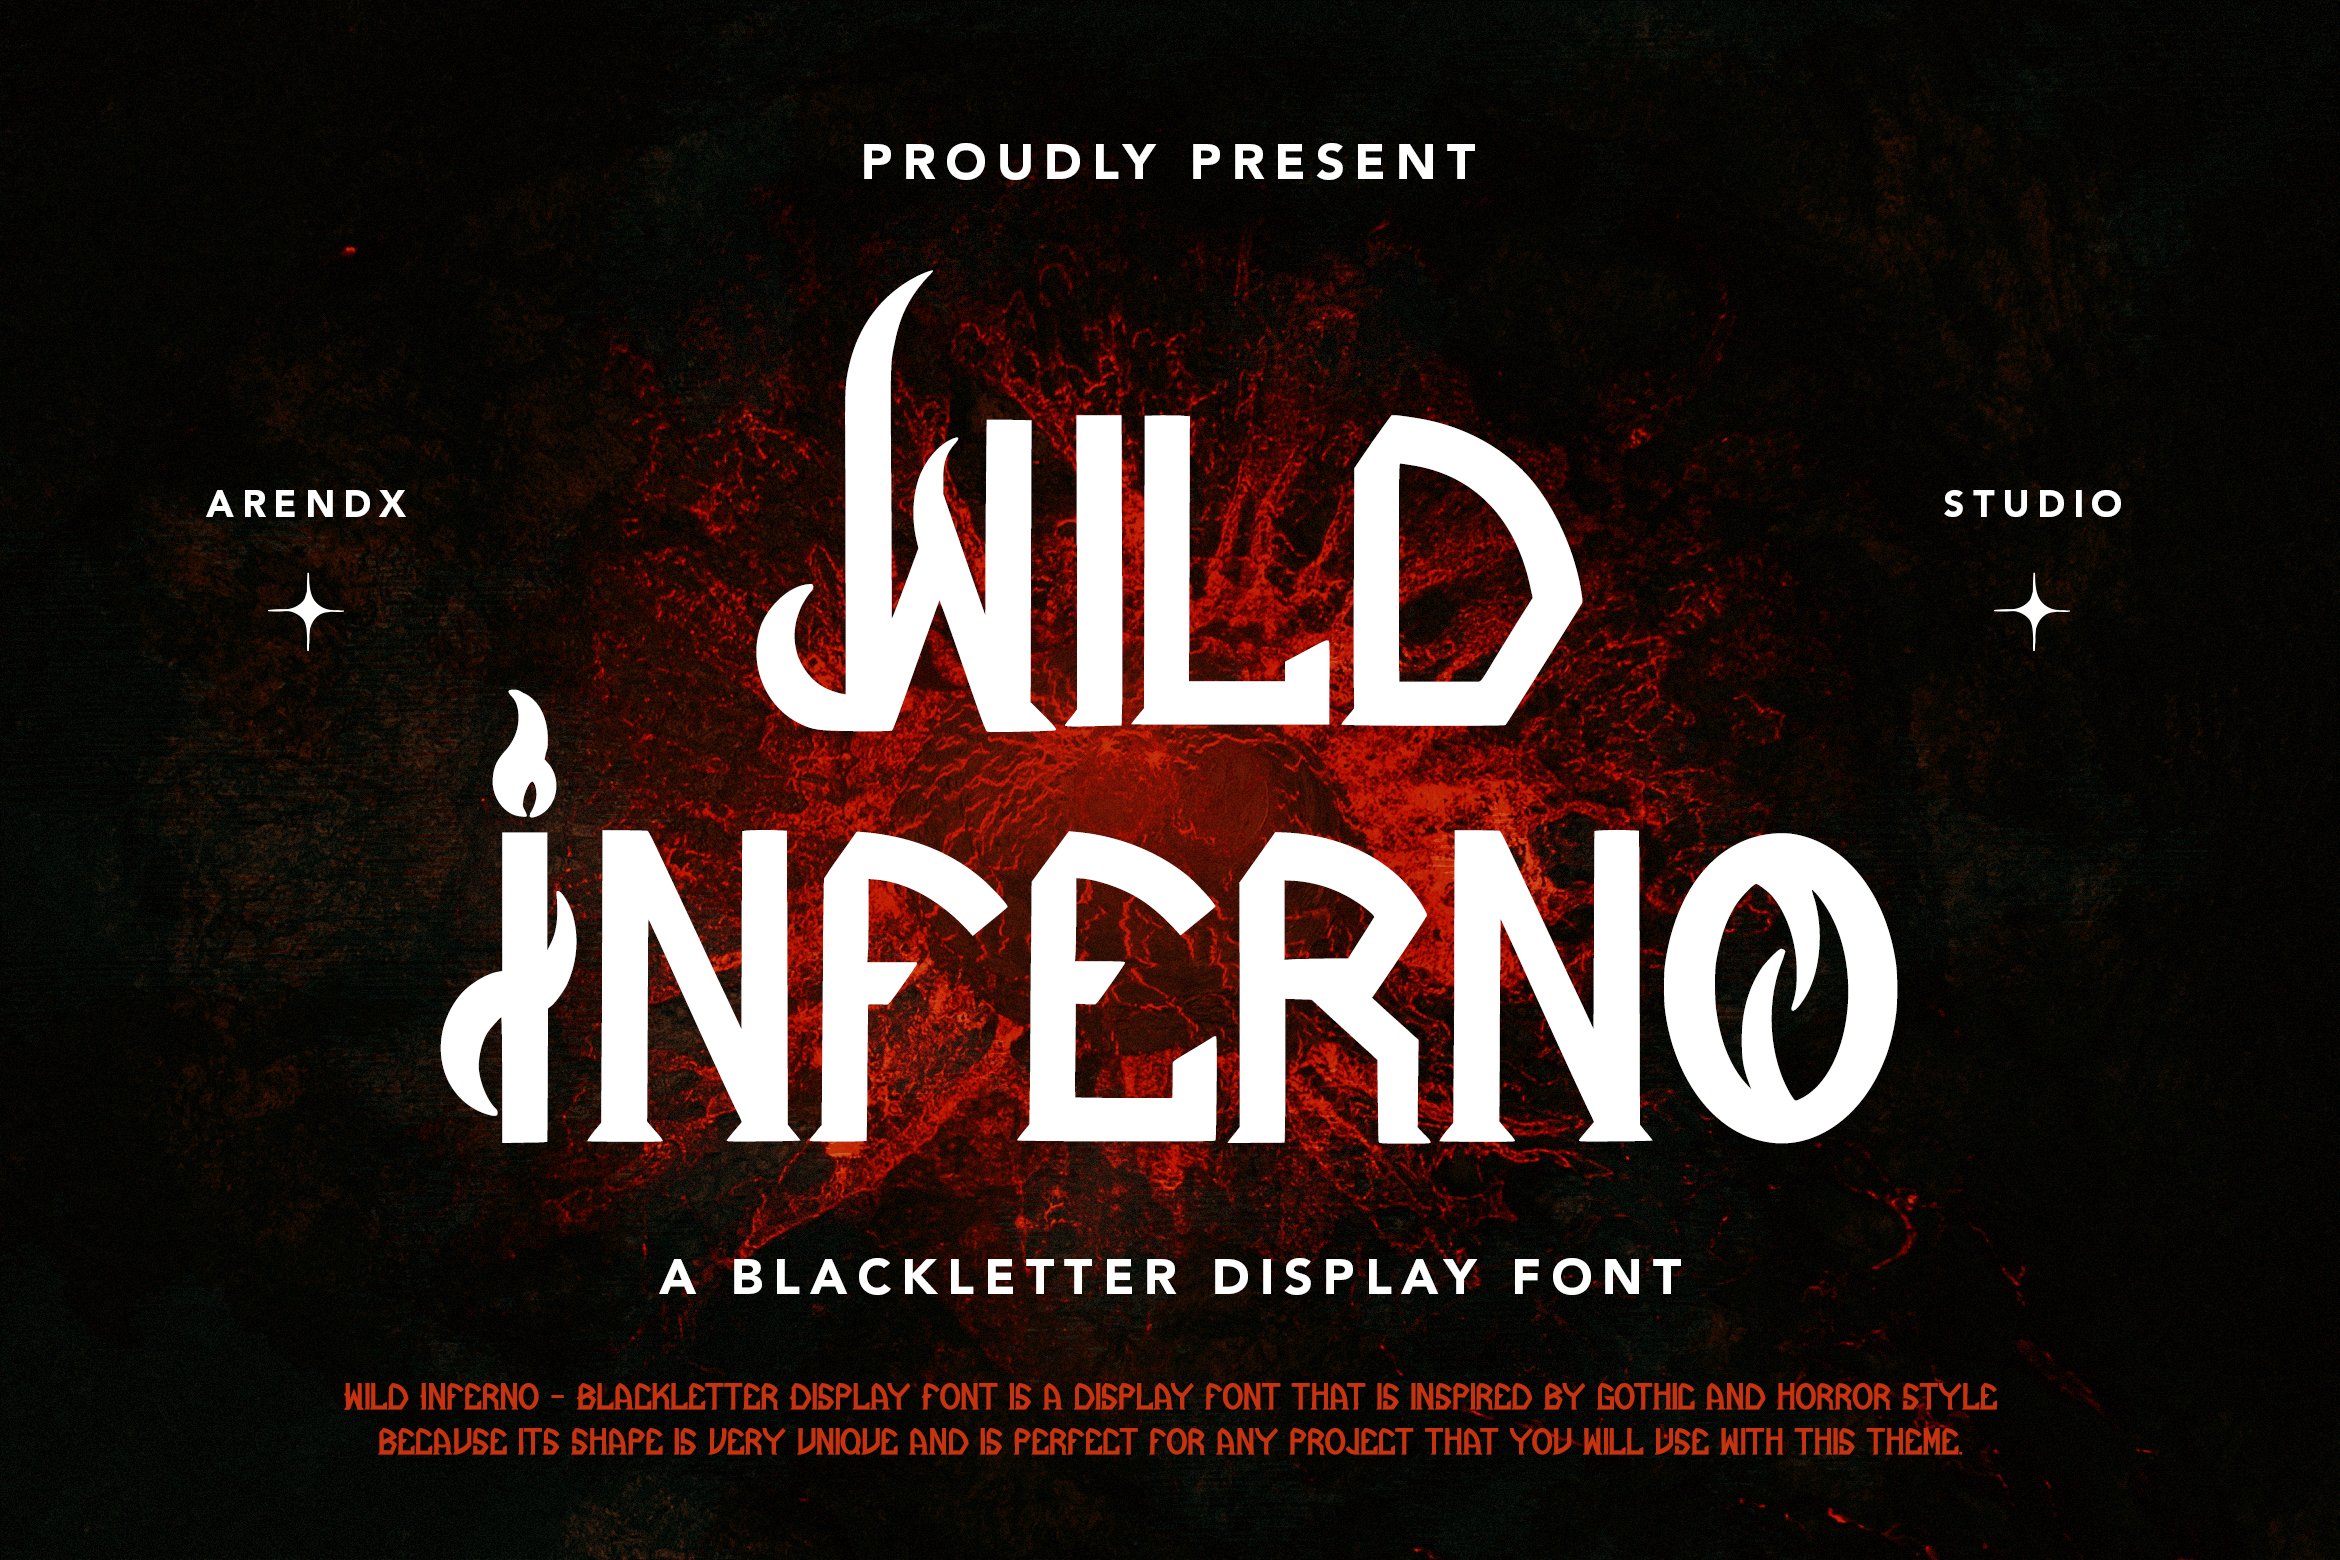 Wild Inferno - Blackletter Font cover image.